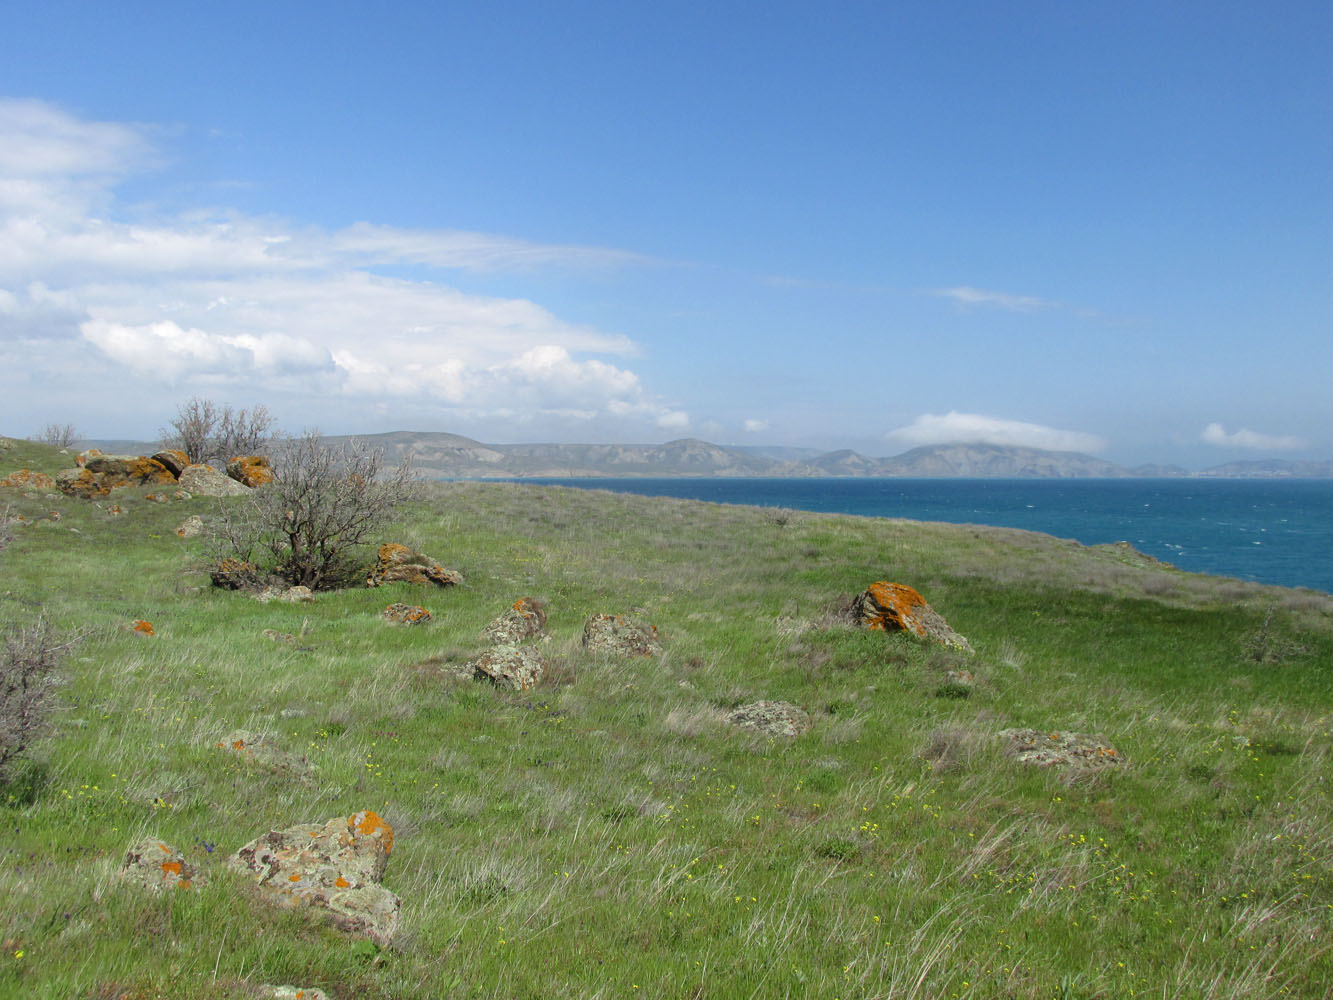 Карадаг, image of landscape/habitat.